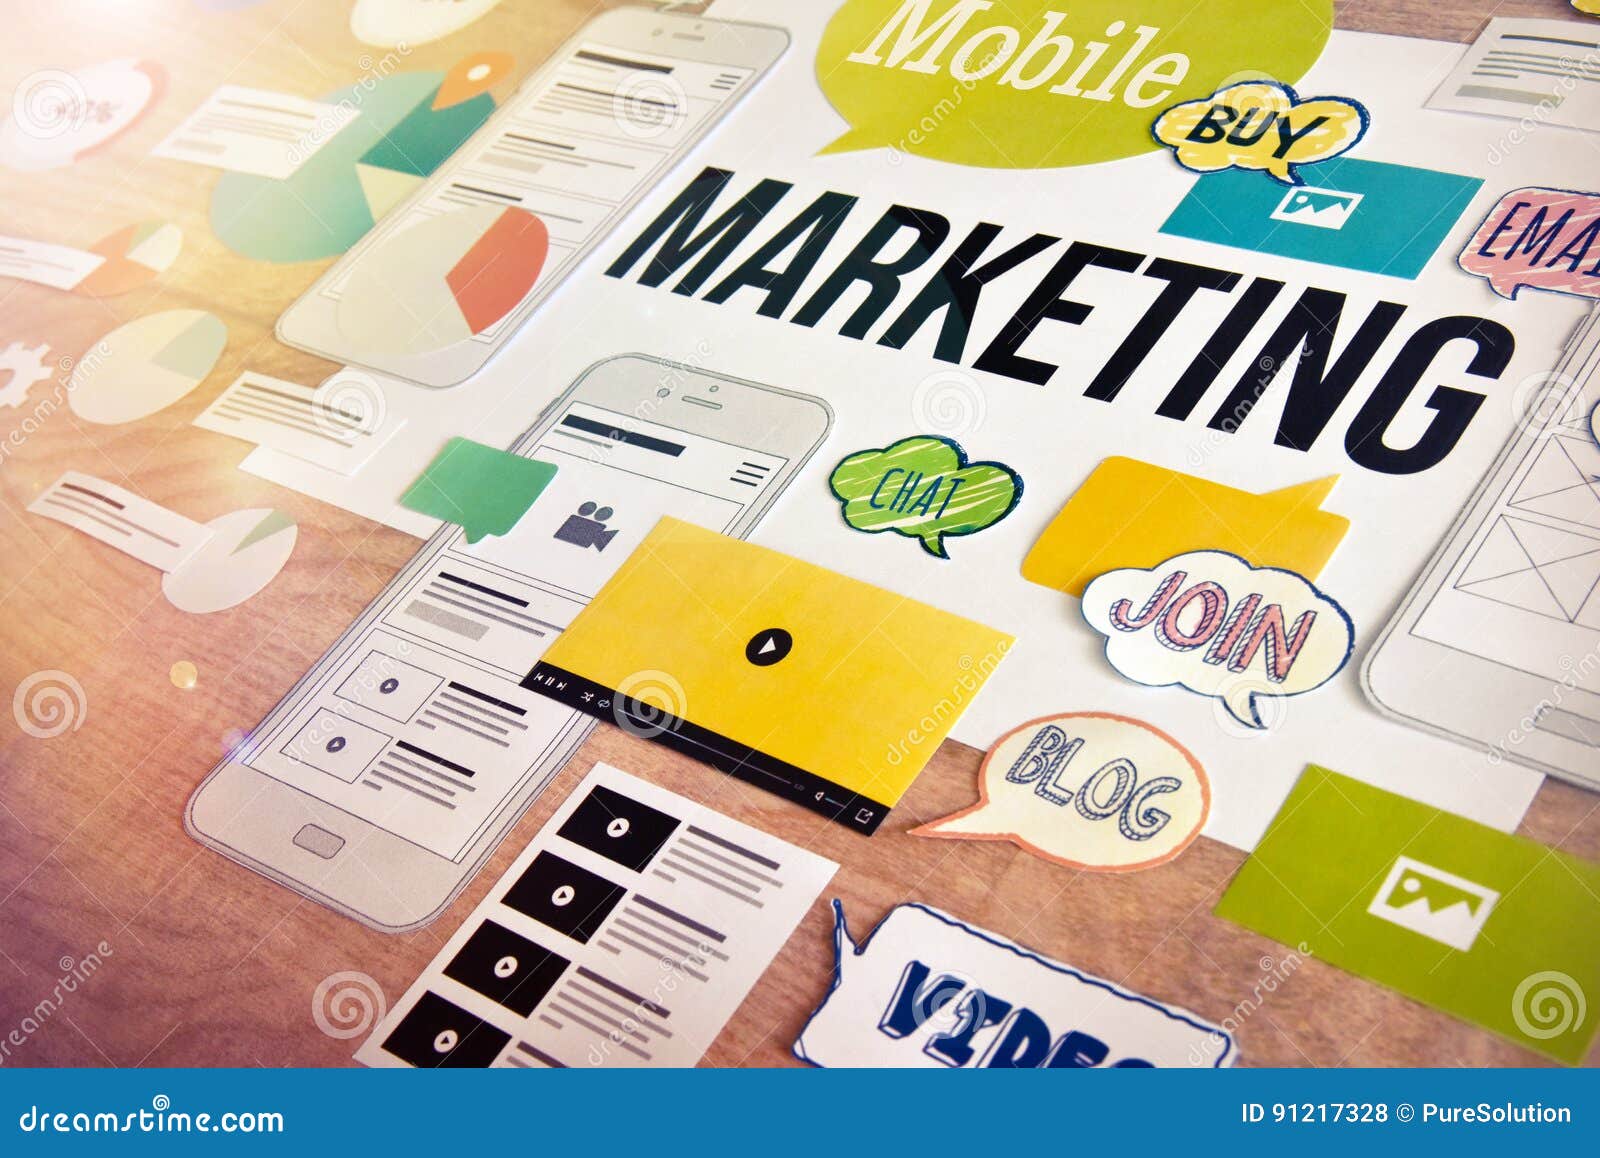 mobile marketing concept